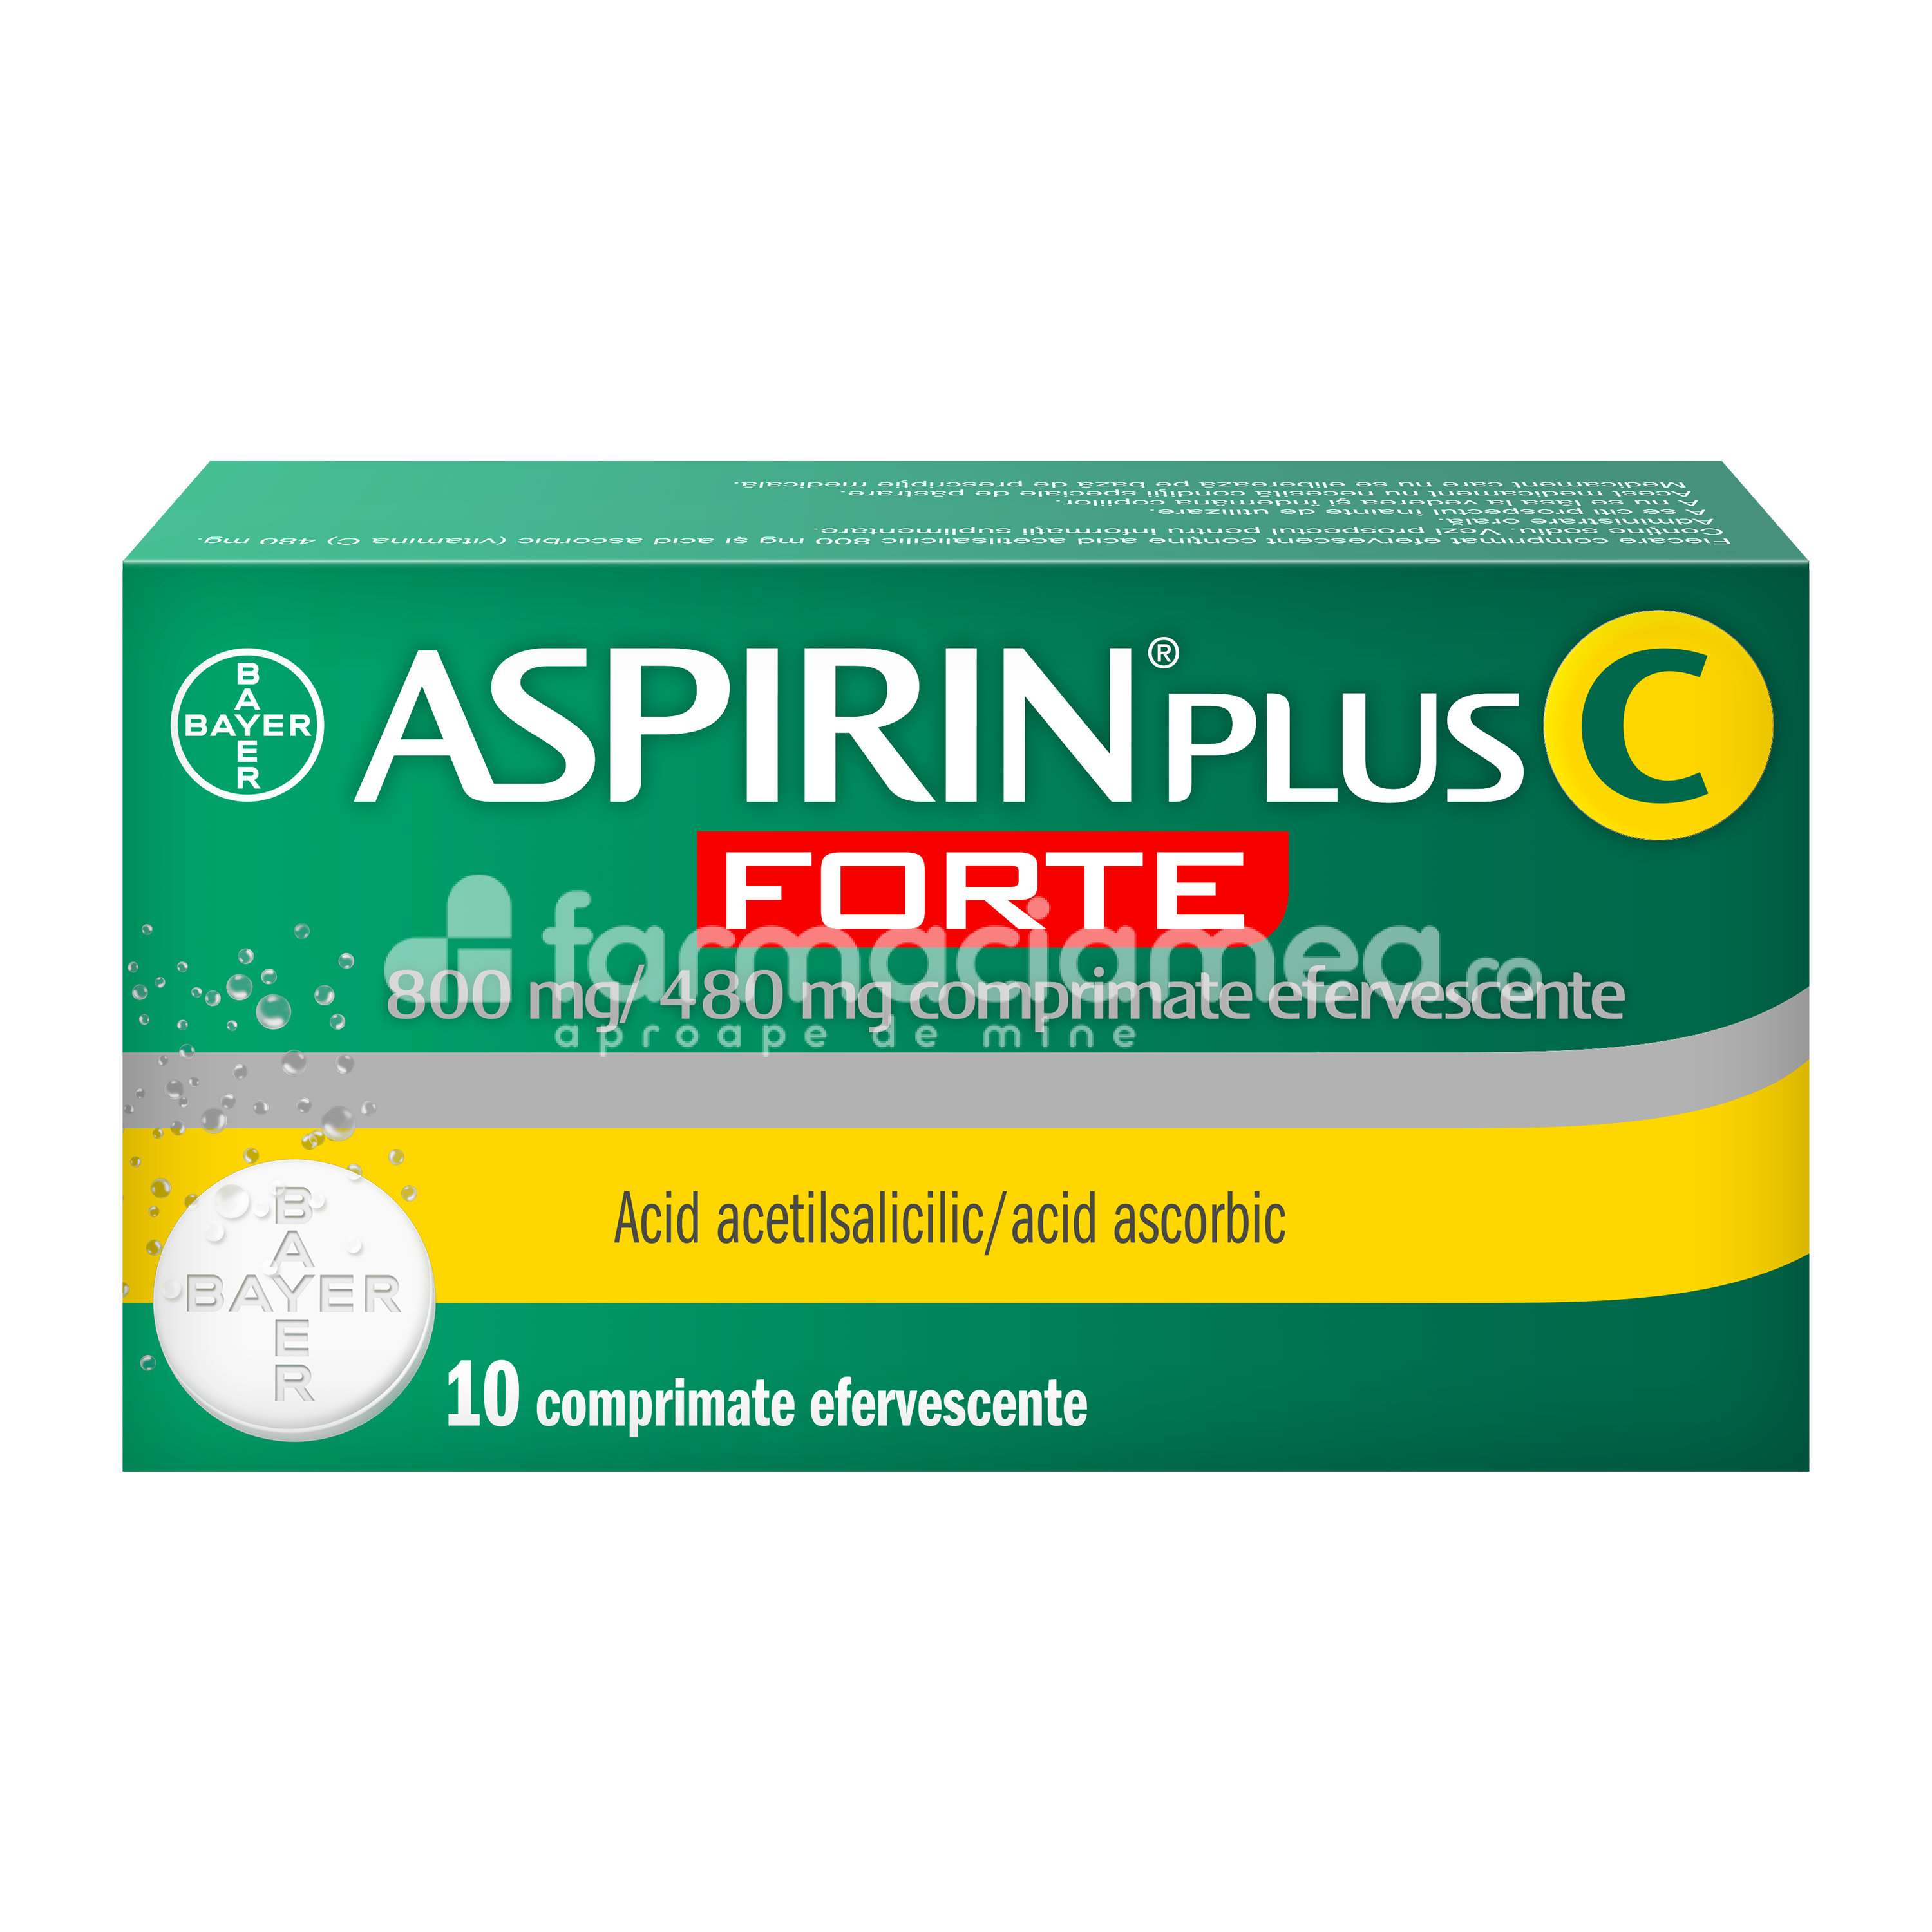 Durere OTC - Aspirin plus C forte, contine acid acetilsalicilic si Vitamina C, cu efect amalgezic, antiiflamator si antipiretic, indicat  in durere, febra si raceala, de la 16 ani, 10 comprimate efervescente, Bayer, farmaciamea.ro